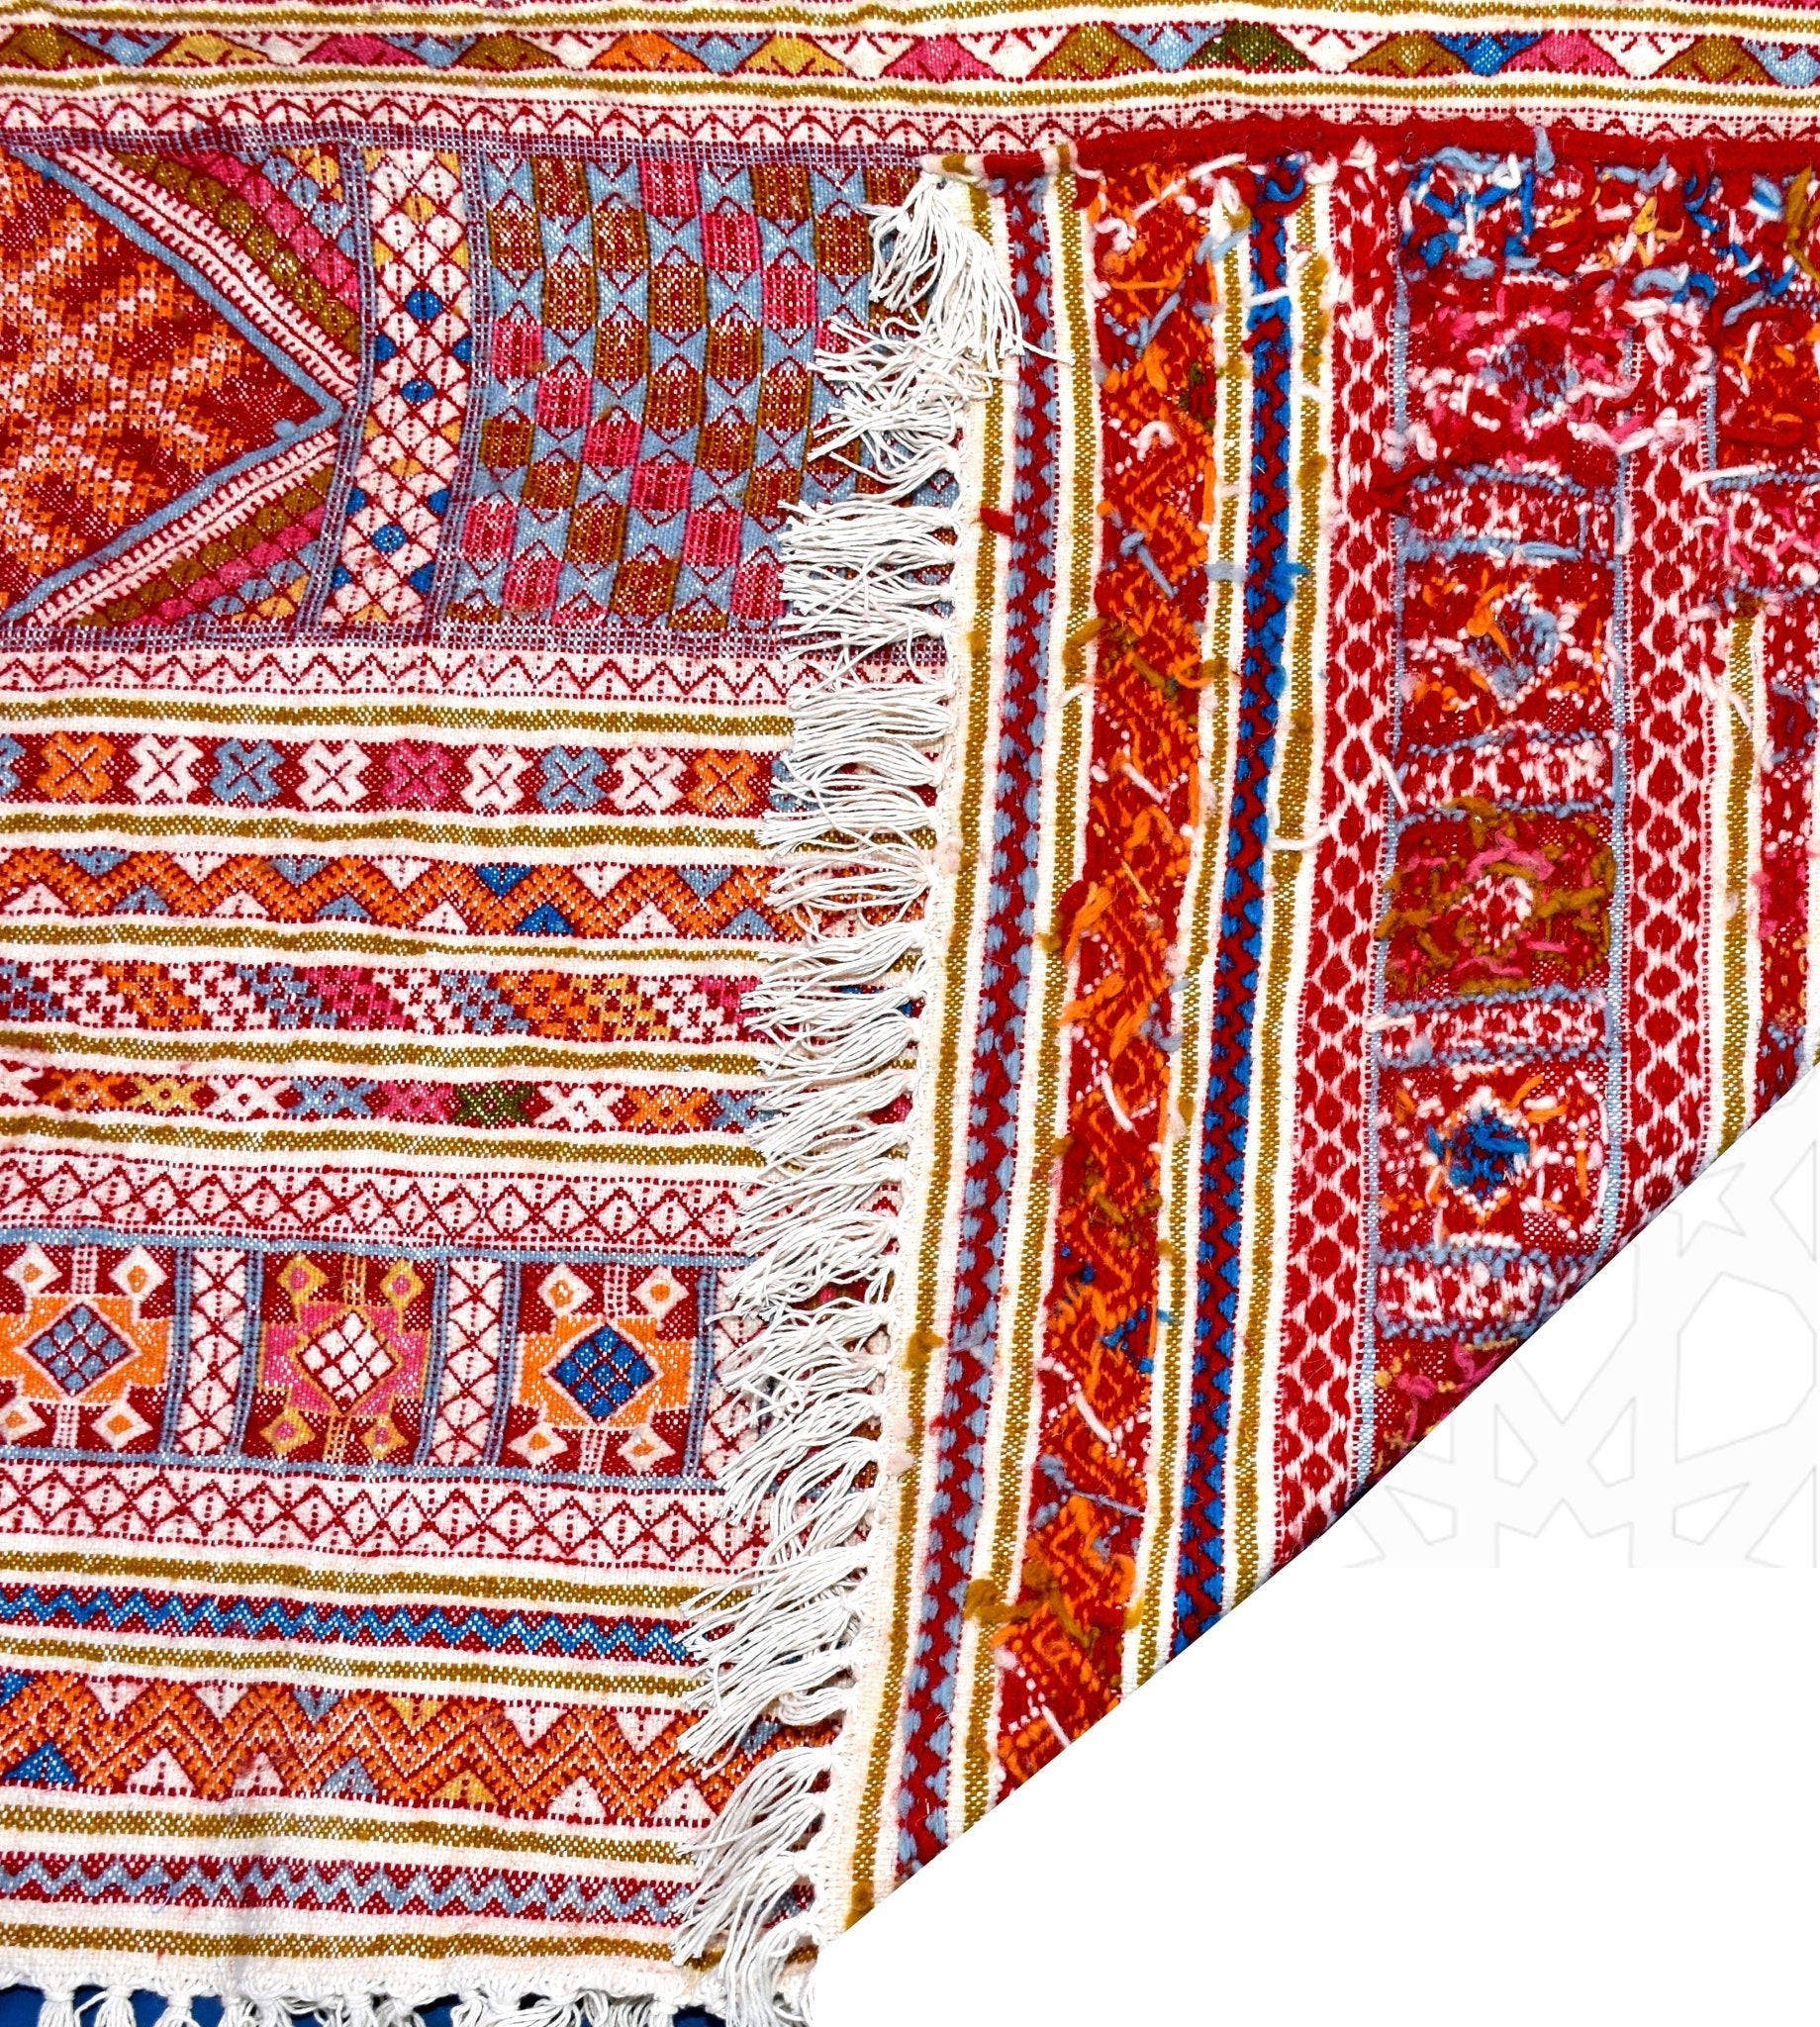 Flatweave kilim hanbal Moroccan rug - 5.09 x 6.6 ft / 155 x 201 cm - Berbers Market